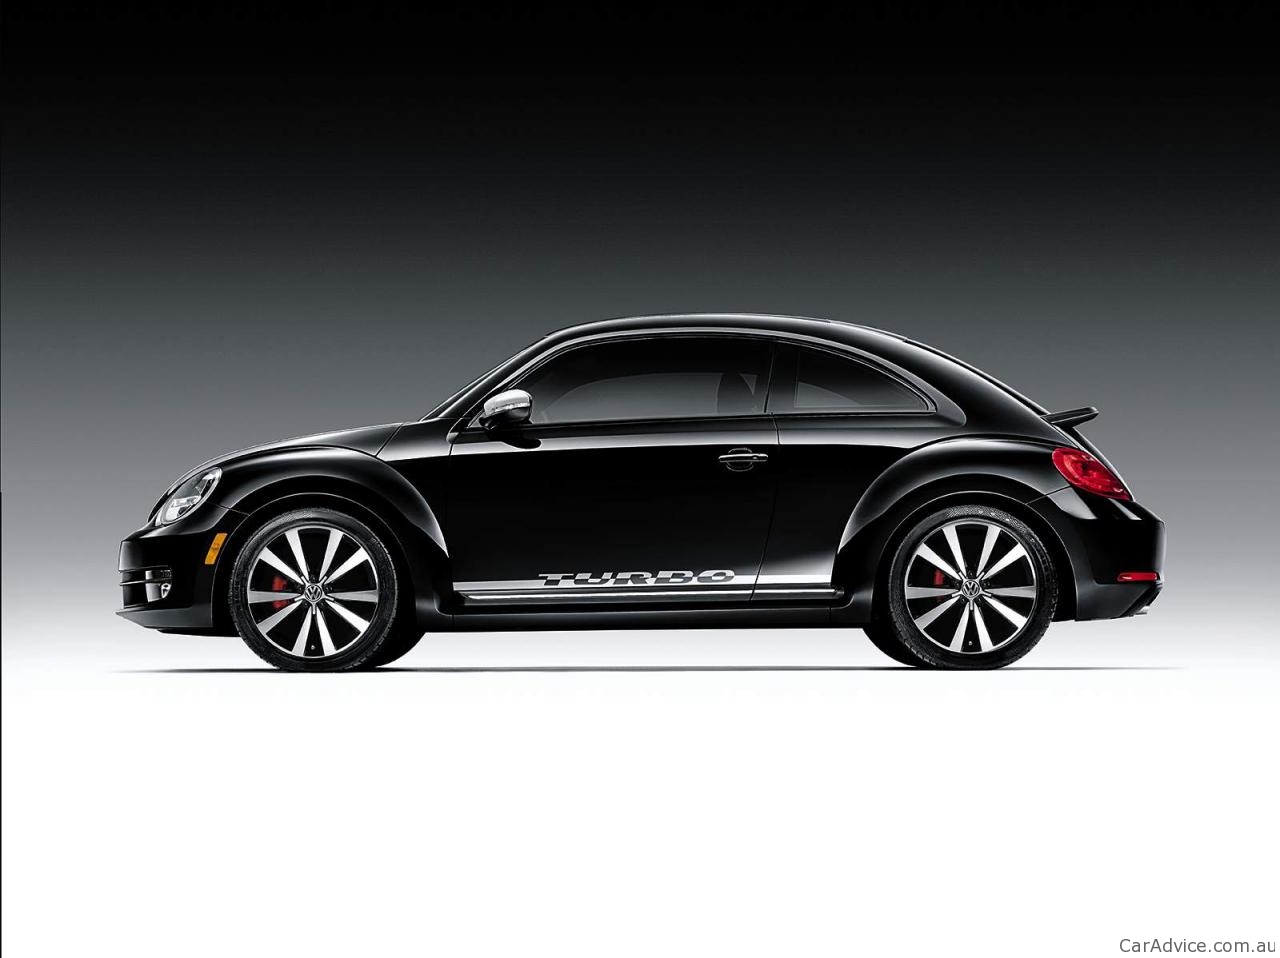 My Oto Moto VW Beetle Black Turbo, More Masculine!